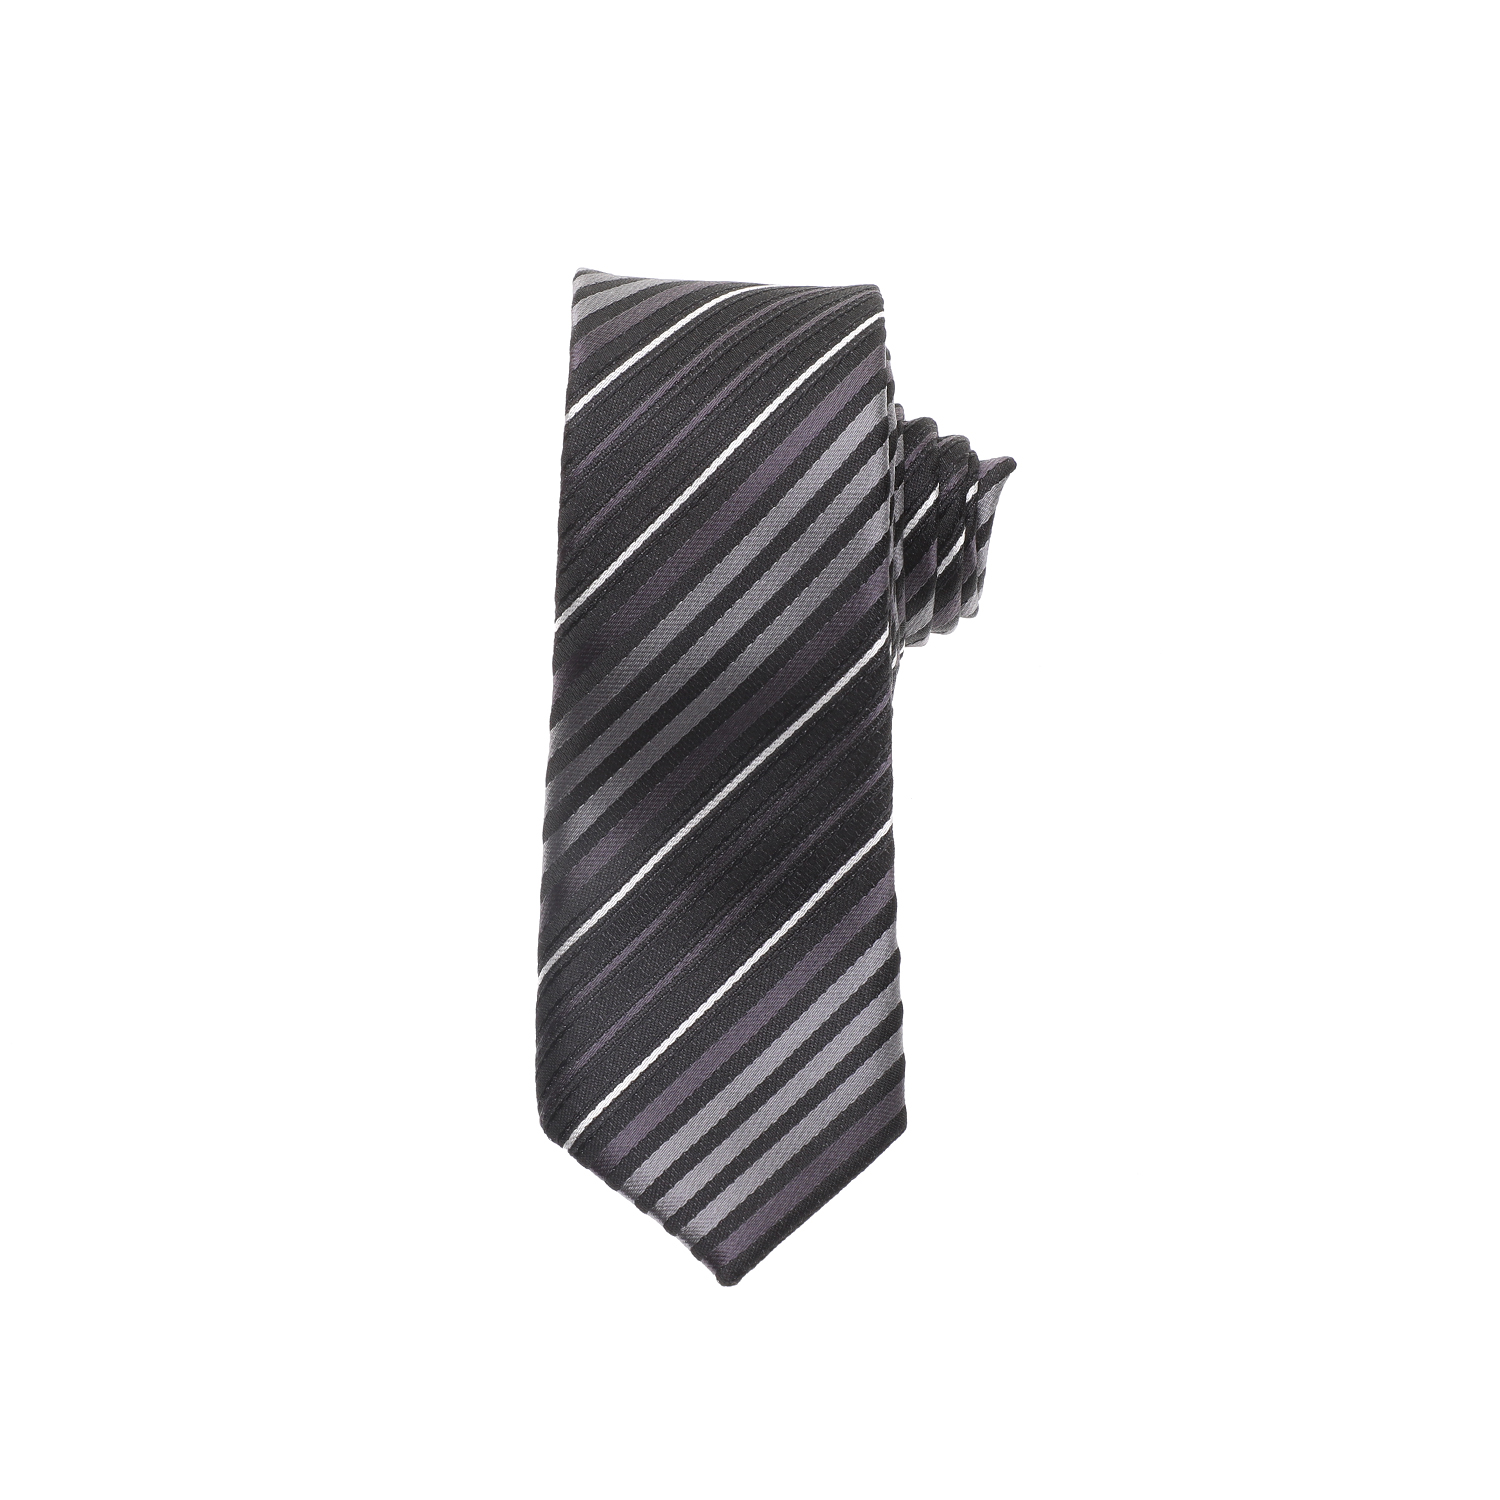 MARTIN & CO MARTIN & CO - Ανδρικό σετ από γραβάτα και μαντήλι MARTIN & CO μαύρο γκρι